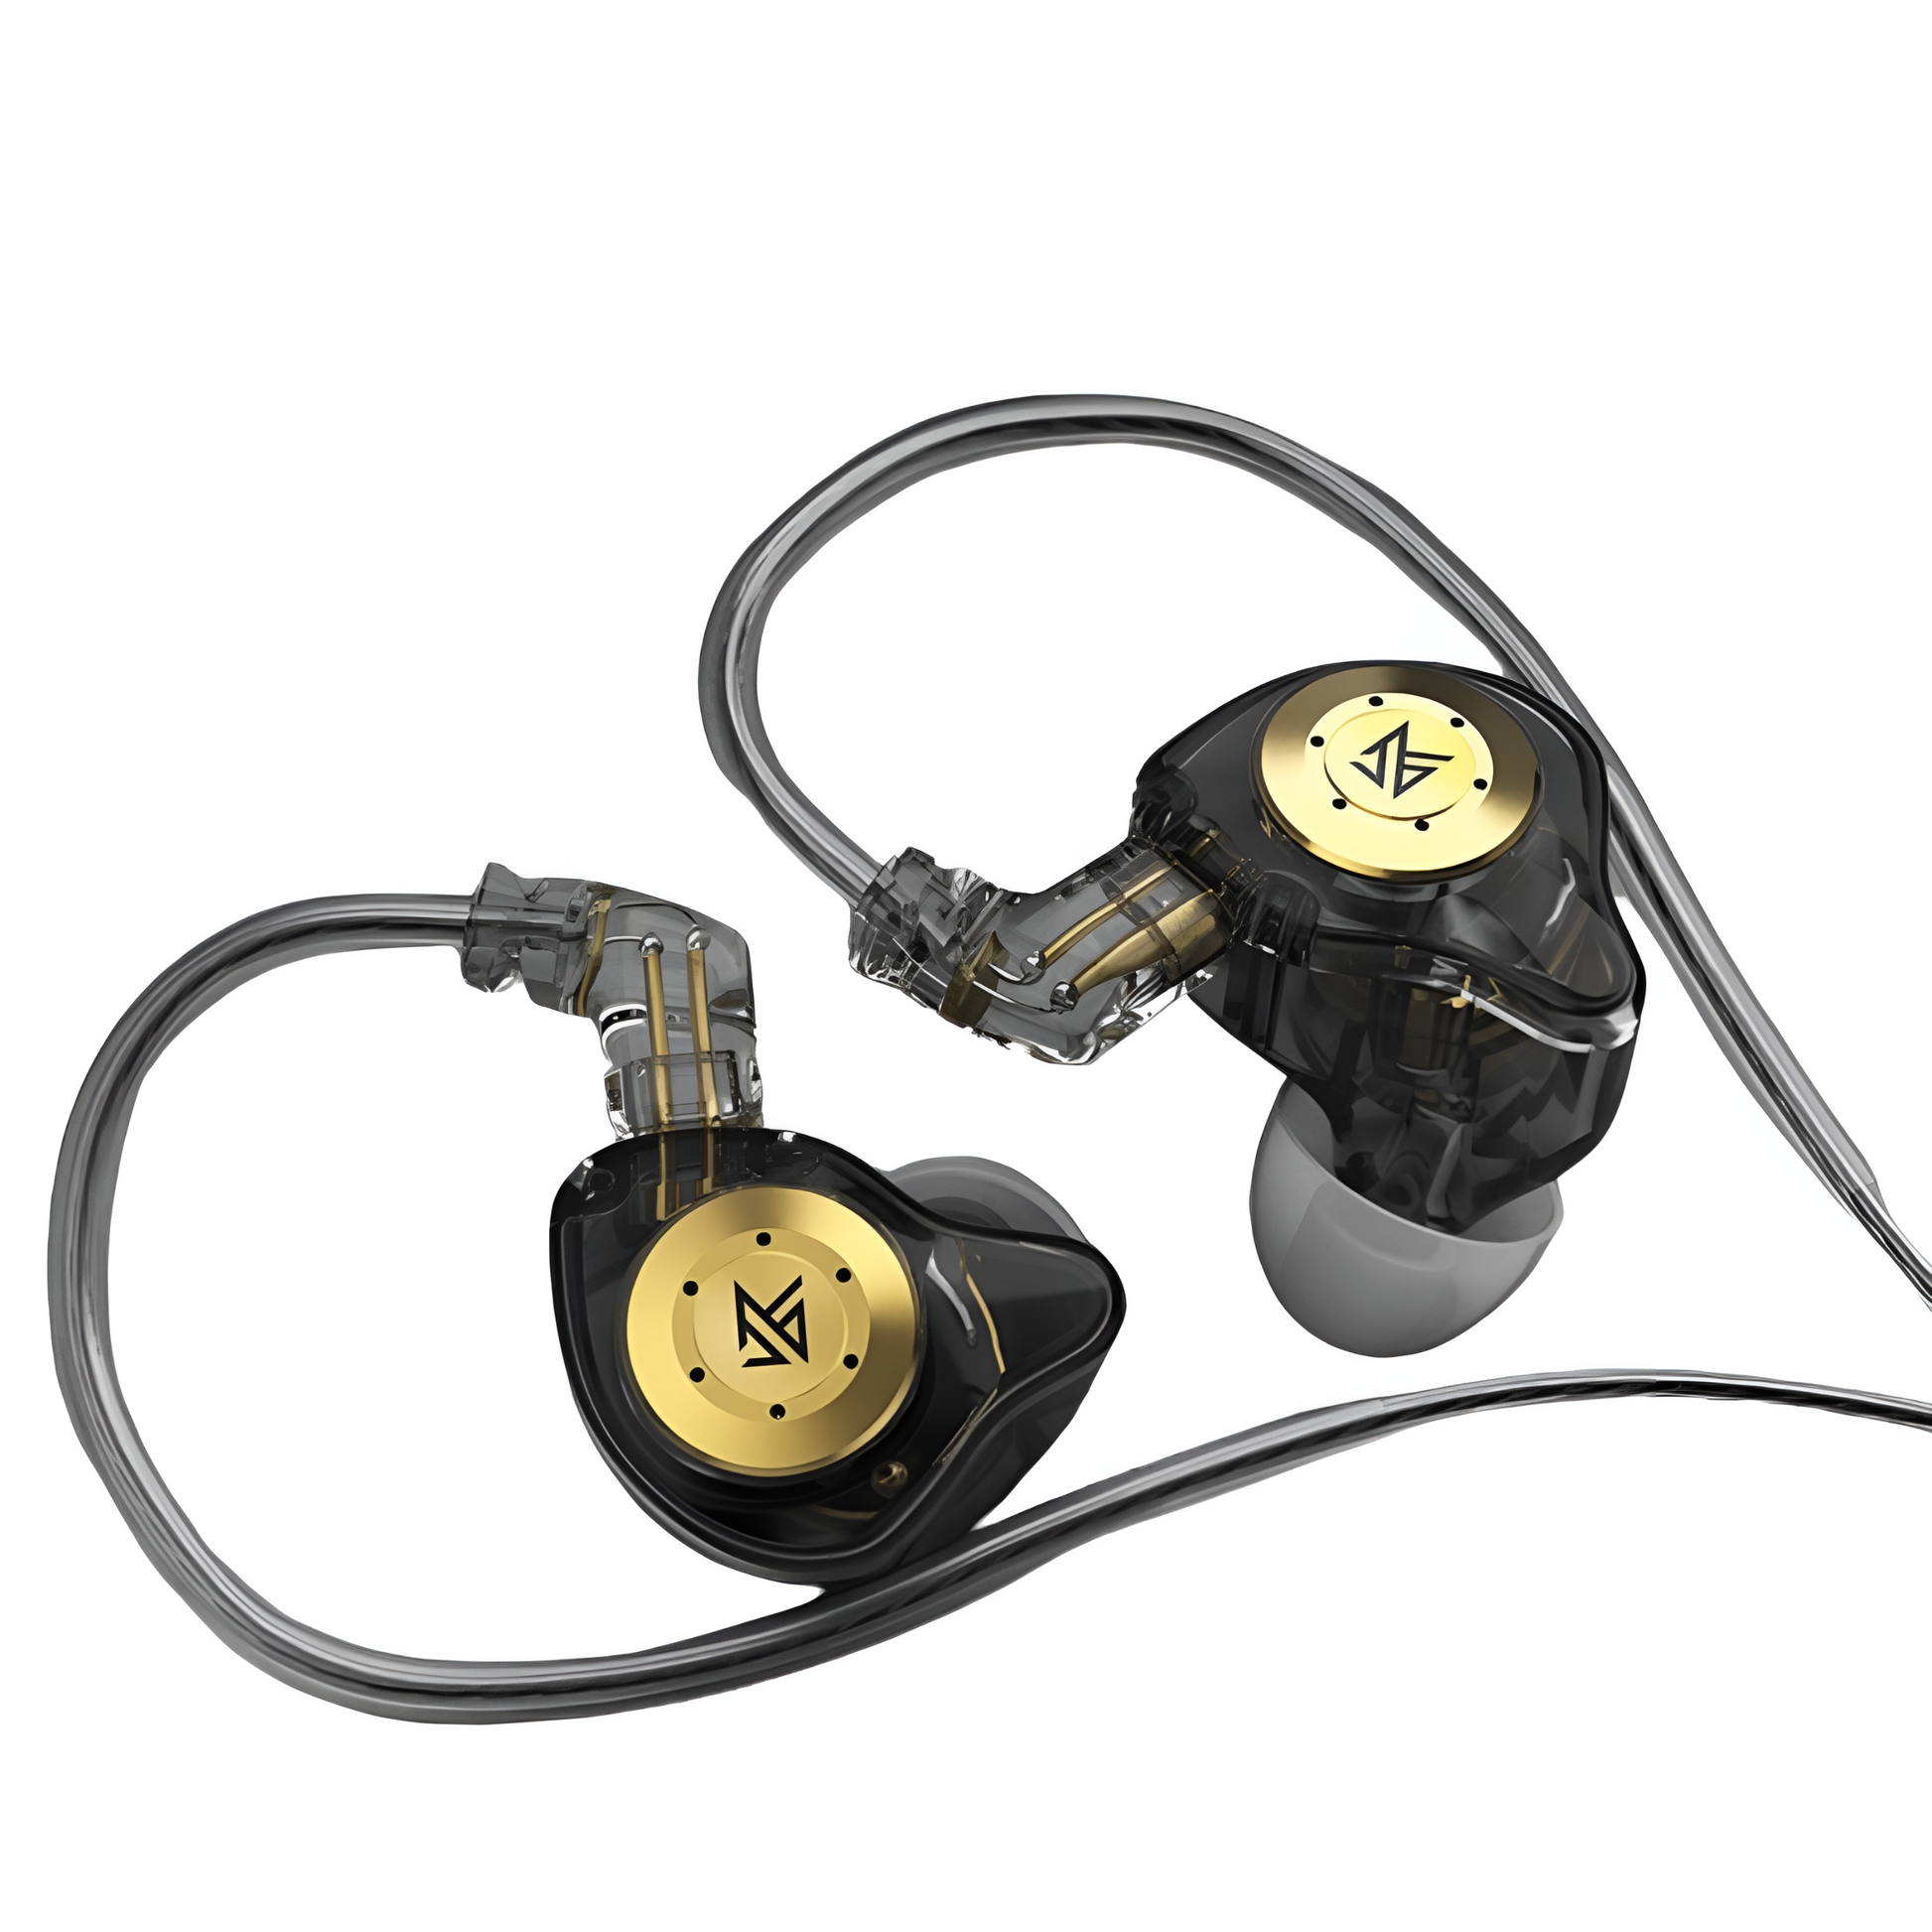 KZ EDX pro: Can HI-FI headphones be cheap?